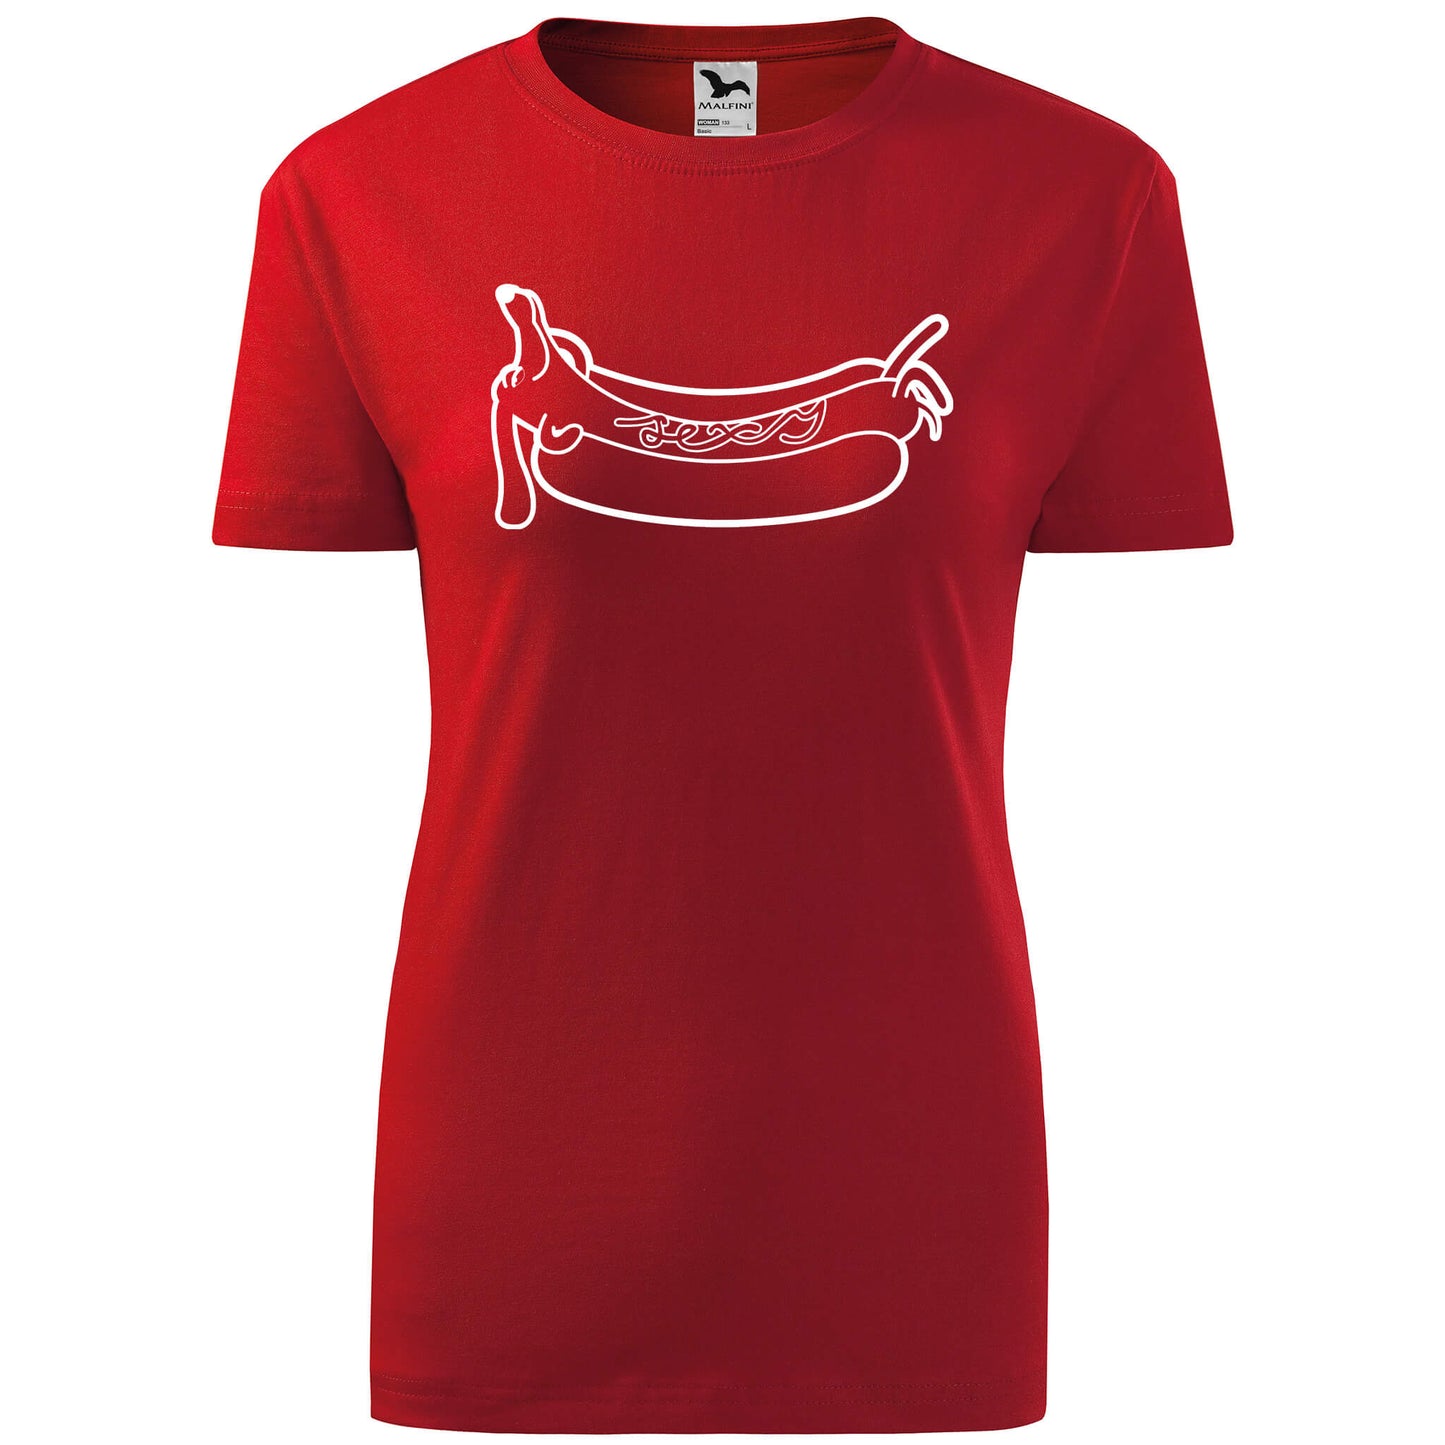 T-shirt - Hot-dog - rvdesignprint